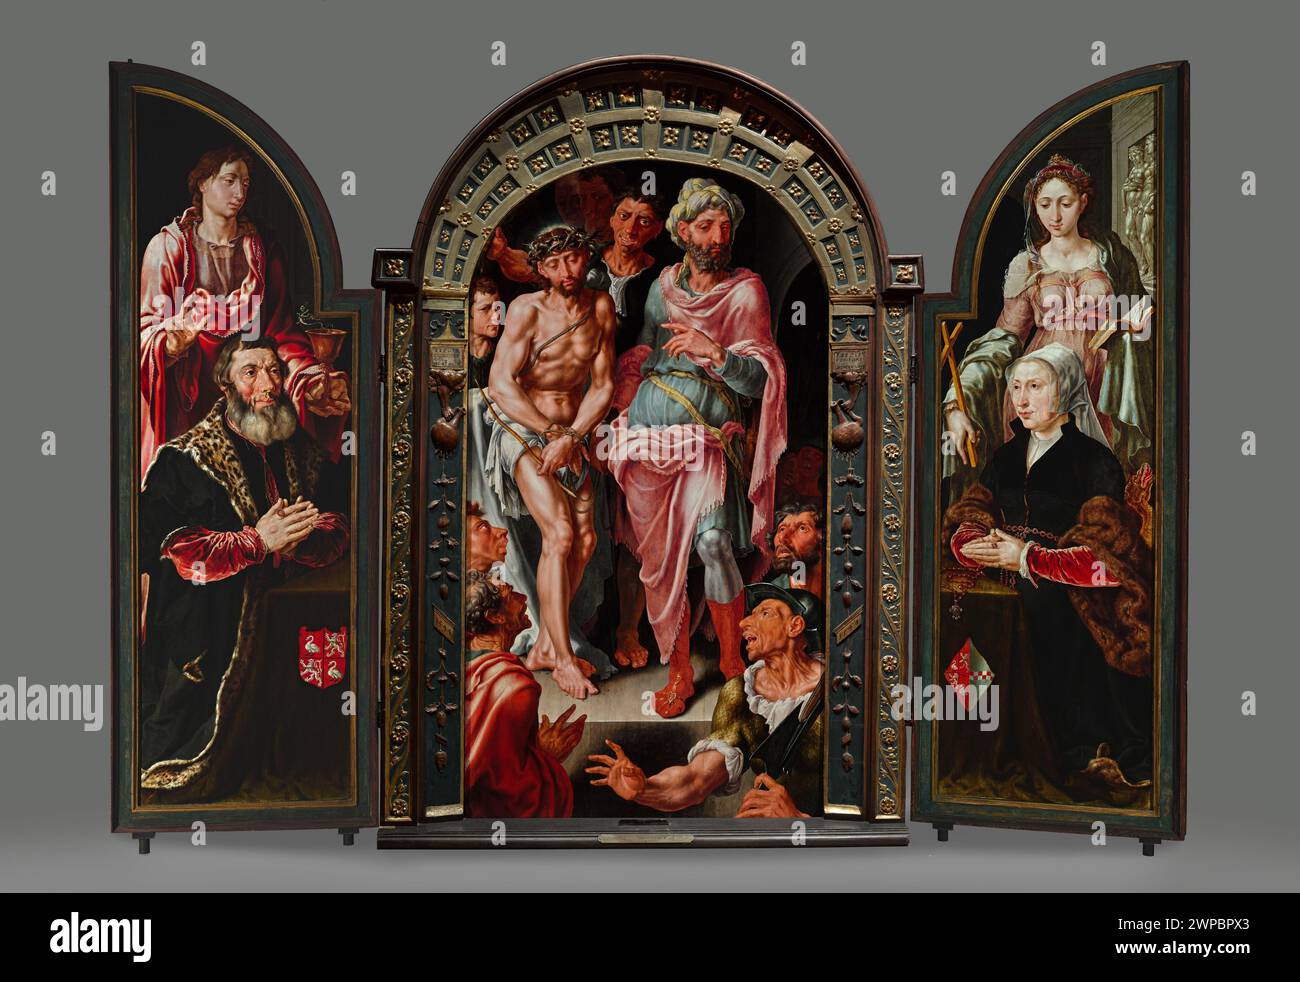 Triptych ecce homo, on wings portraits of donors; Heemskek, Maarten Van (1498-1574); 1544 (1544-00-00-1544-00-00);Ecce Homo (iconogr.), John the Evangelist (Saint -? -A 100), Jan Van Drenckwaerdt (? -1549), Jesus Christ, Margaretha de Jonge van Baertwyck (? -1542), Małgorzata Martynica (Saint -? -? Ca 303–305), Pilate Pontius (prefect Judea - Fl. 26-36/37), Schlesisches Museum der Bildenen Künste (Wrocław - 1880-1945) - collection, cup (attribute), Dutch painting, portraits, portraits, women's portraits, portraits Men's, religious scenes, dragon (attribute), triptych Stock Photo